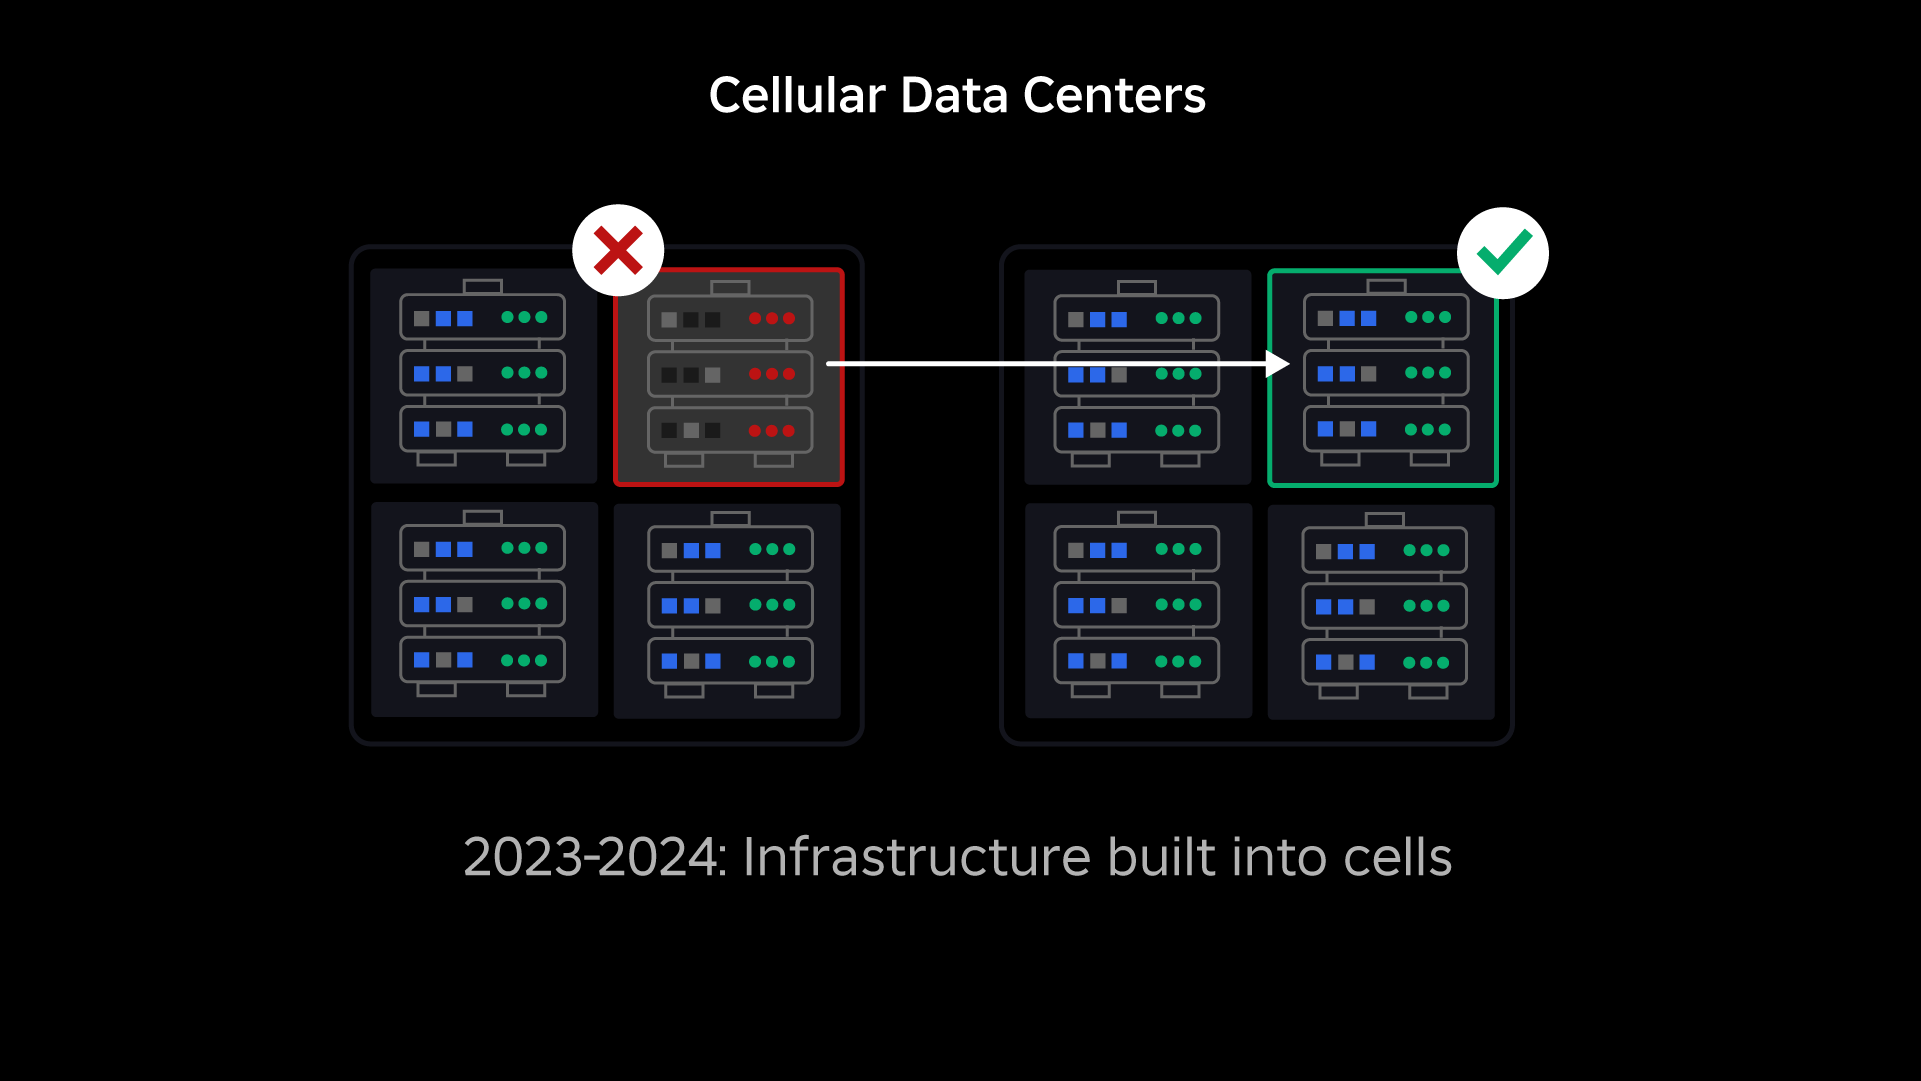 Cellular data centers